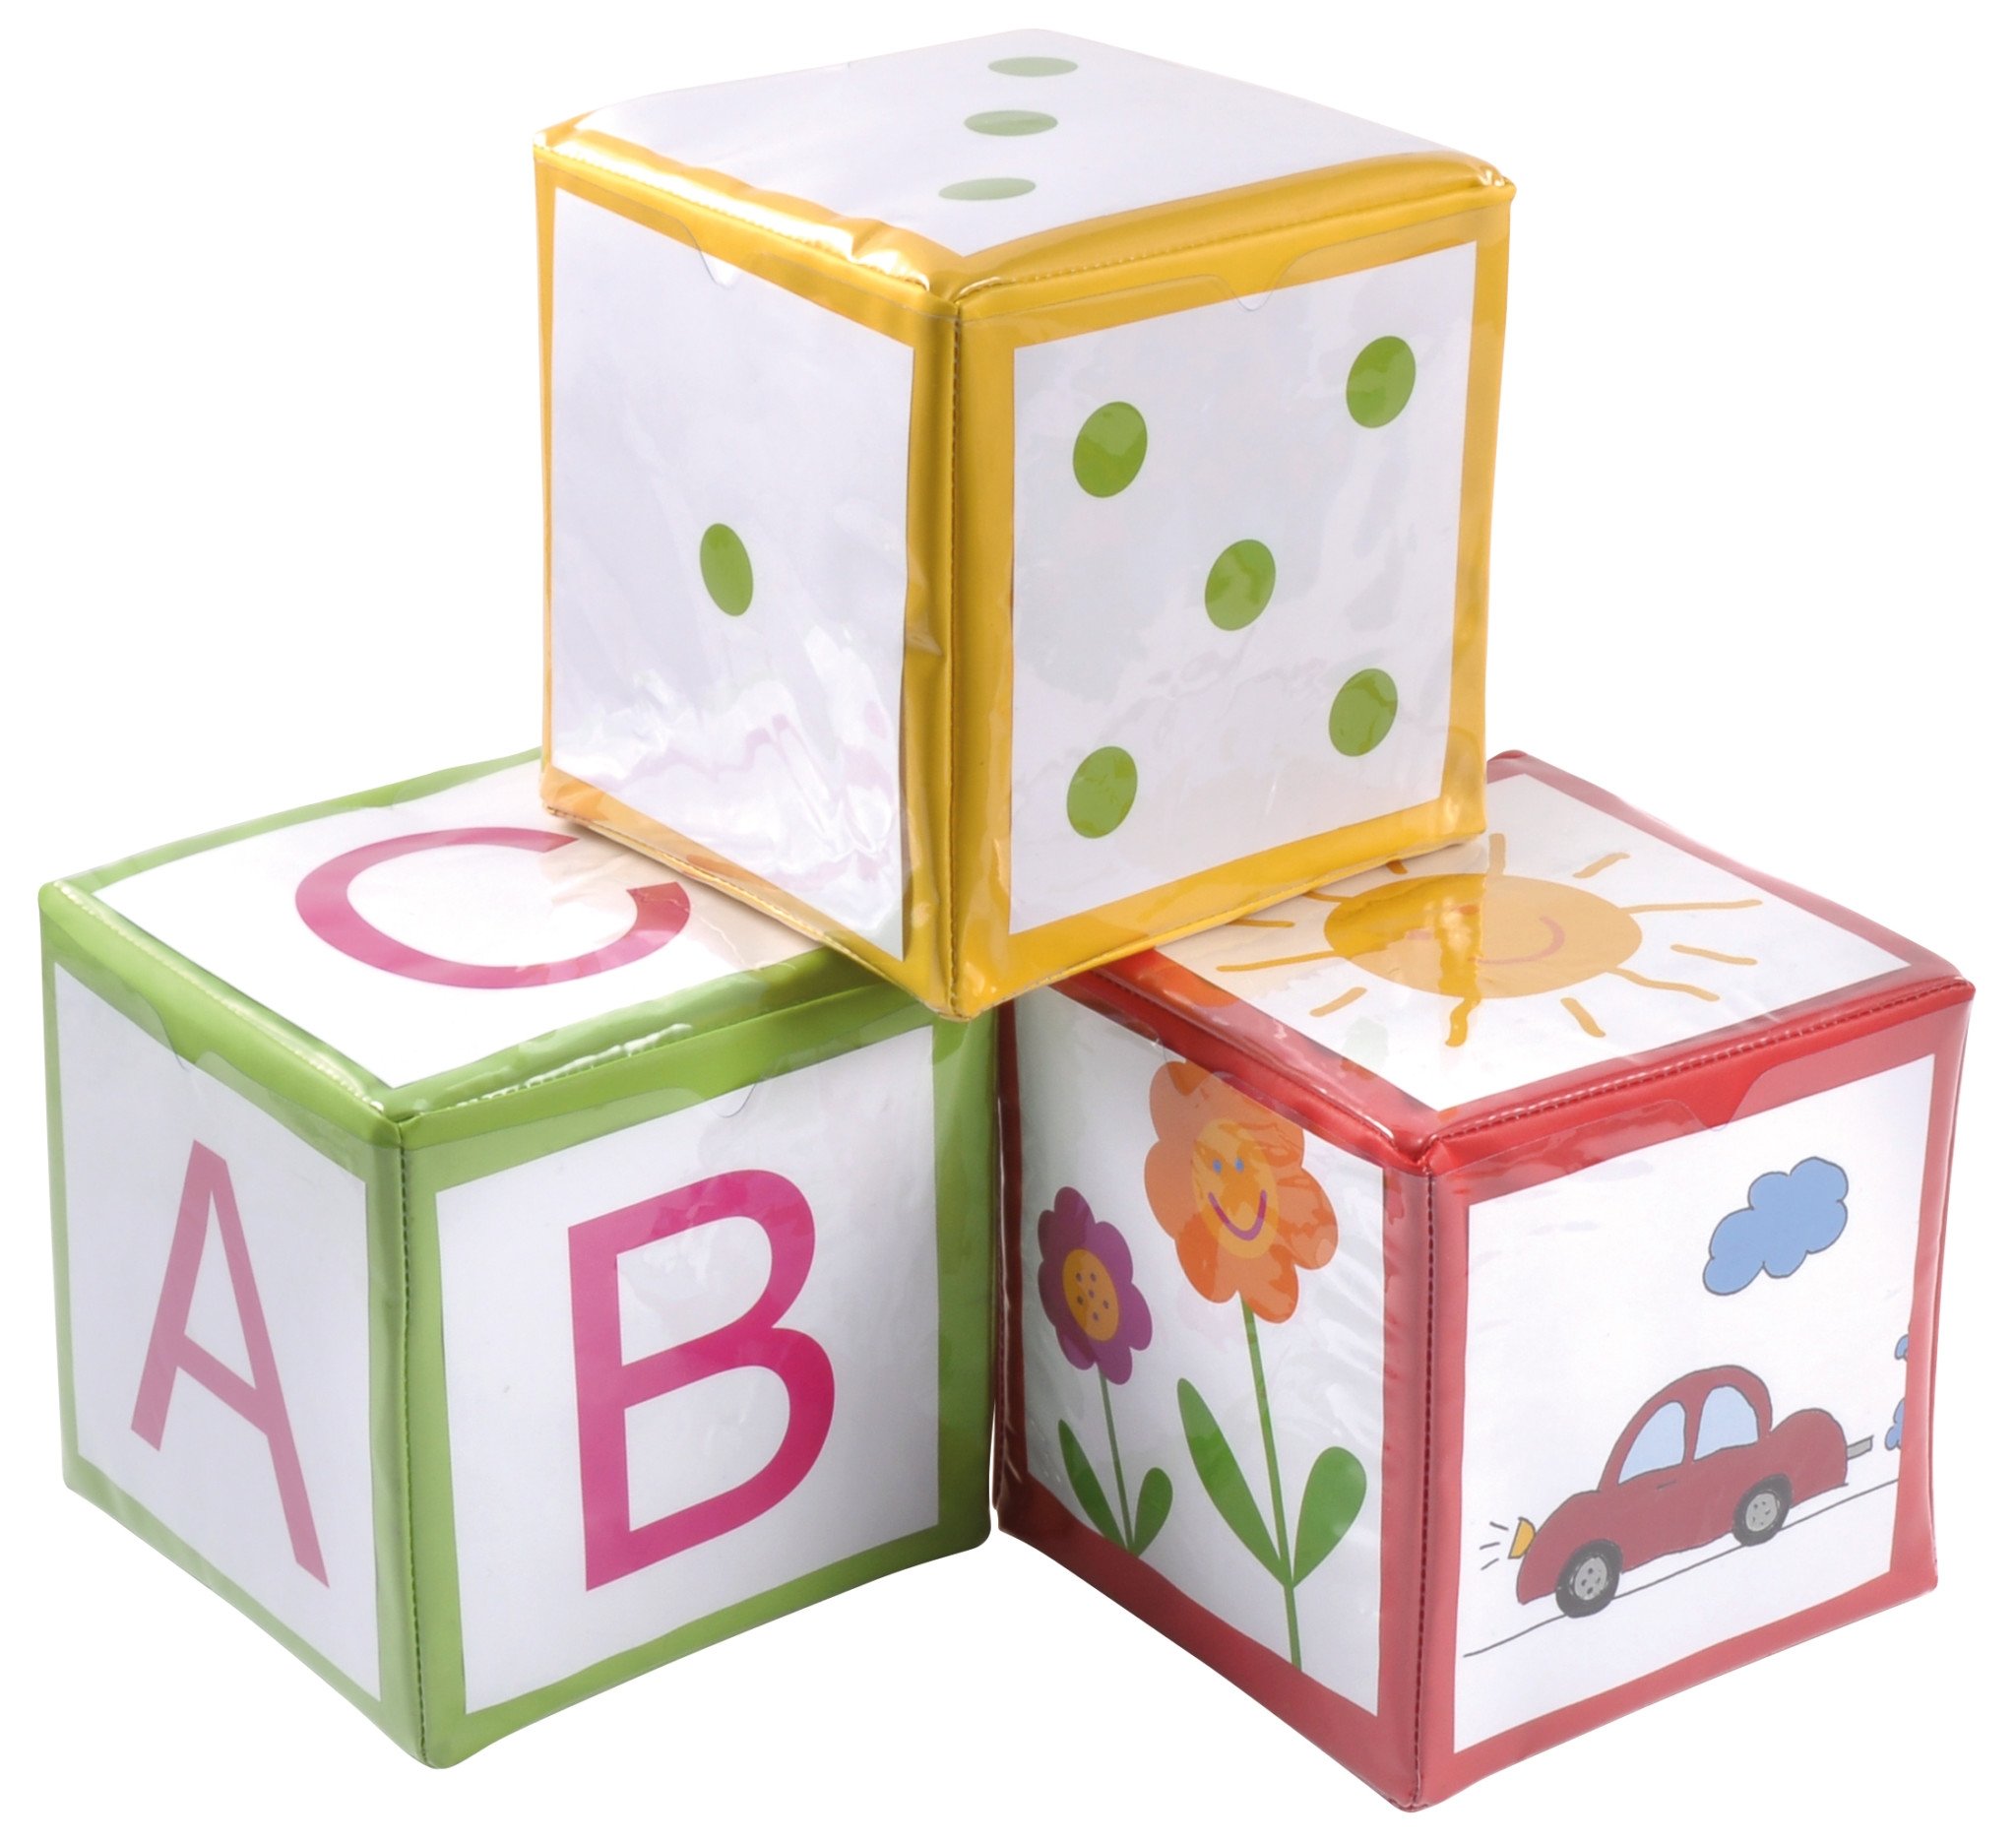 Reg kz. Кубики для детей. Кубики "игрушки". Куб для детей. Кубик с кармашками.